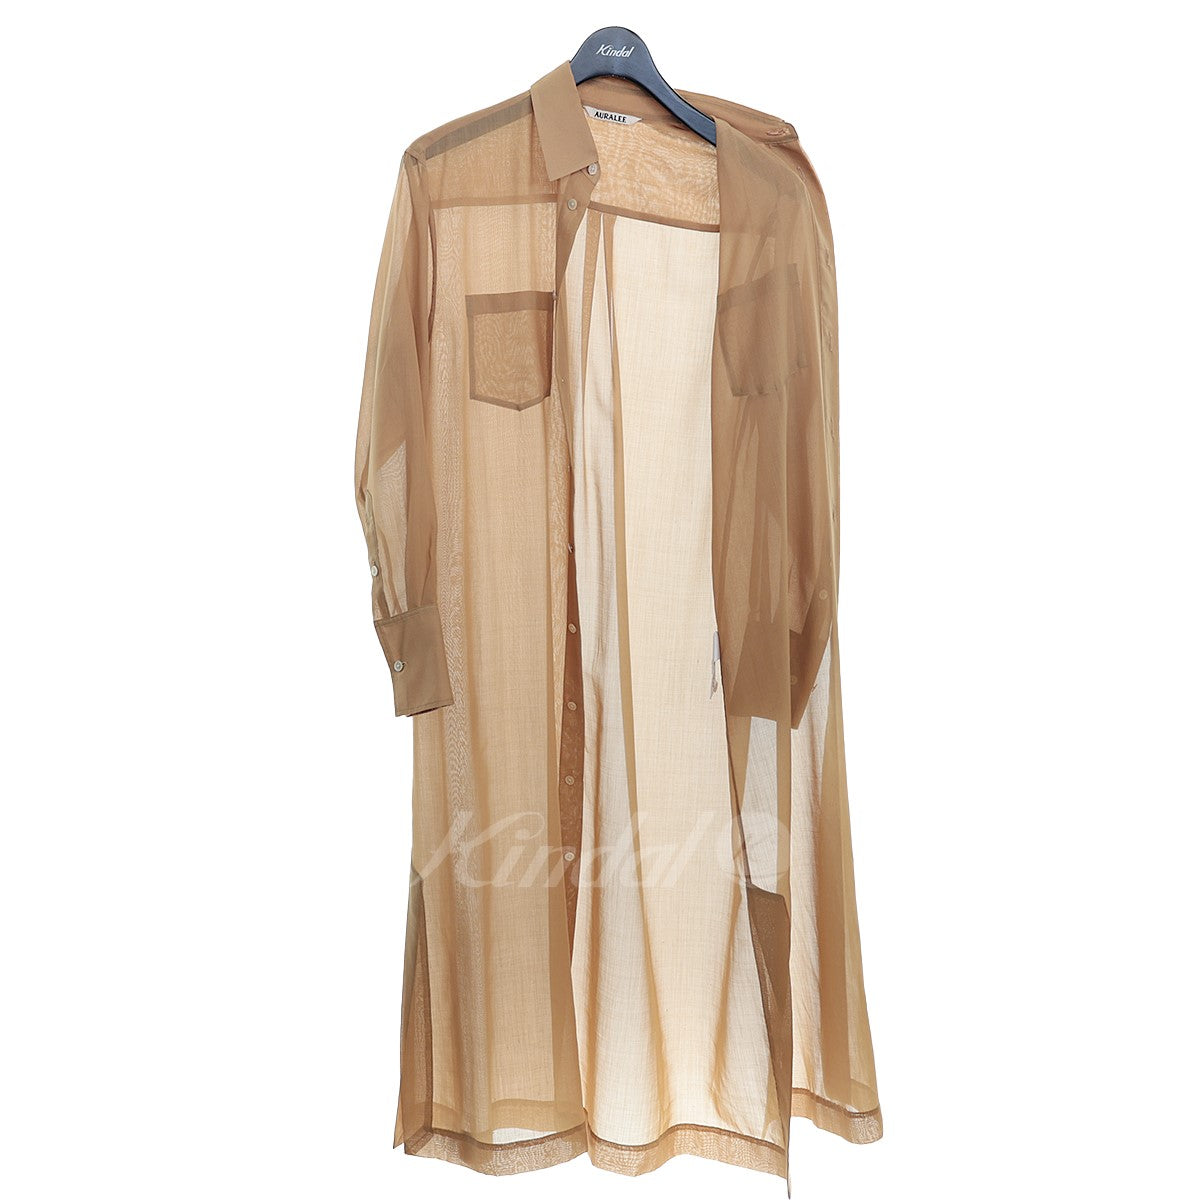 AURALEE(オーラリー) シャツワンピースWOOL Polyester SHEER CLOTH SHIRTS ONEPIECE ブラウン サイズ:0 レディース ワンピース 中古・古着